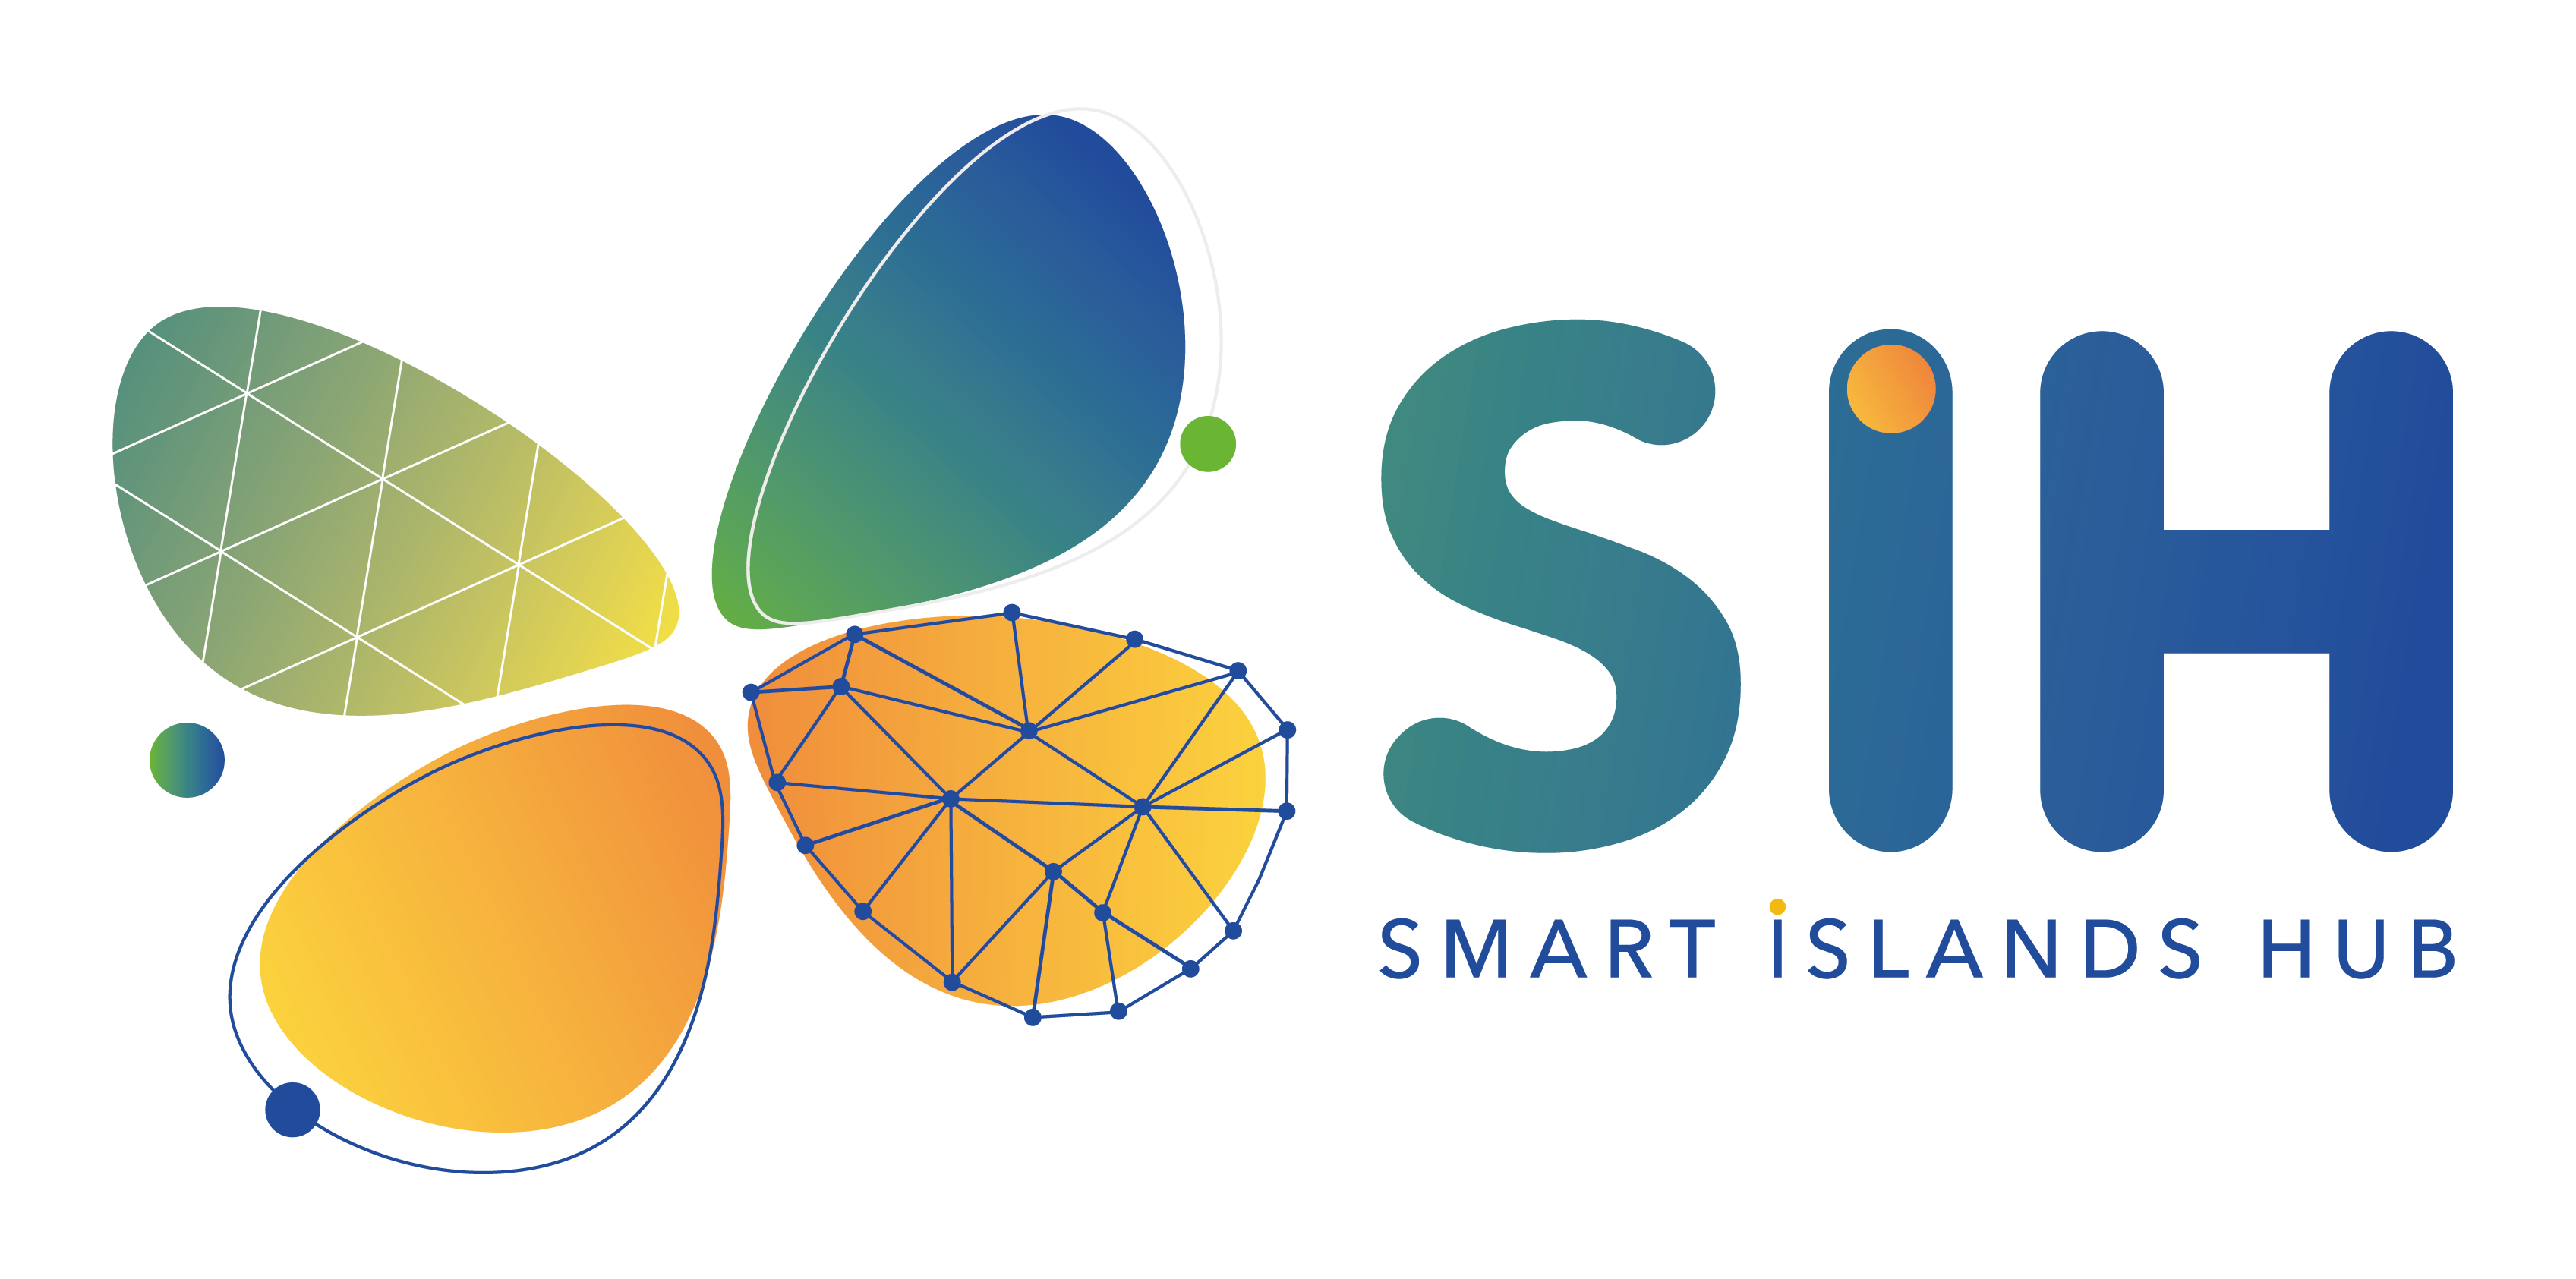 Projeto SMART ISLANDS HUB